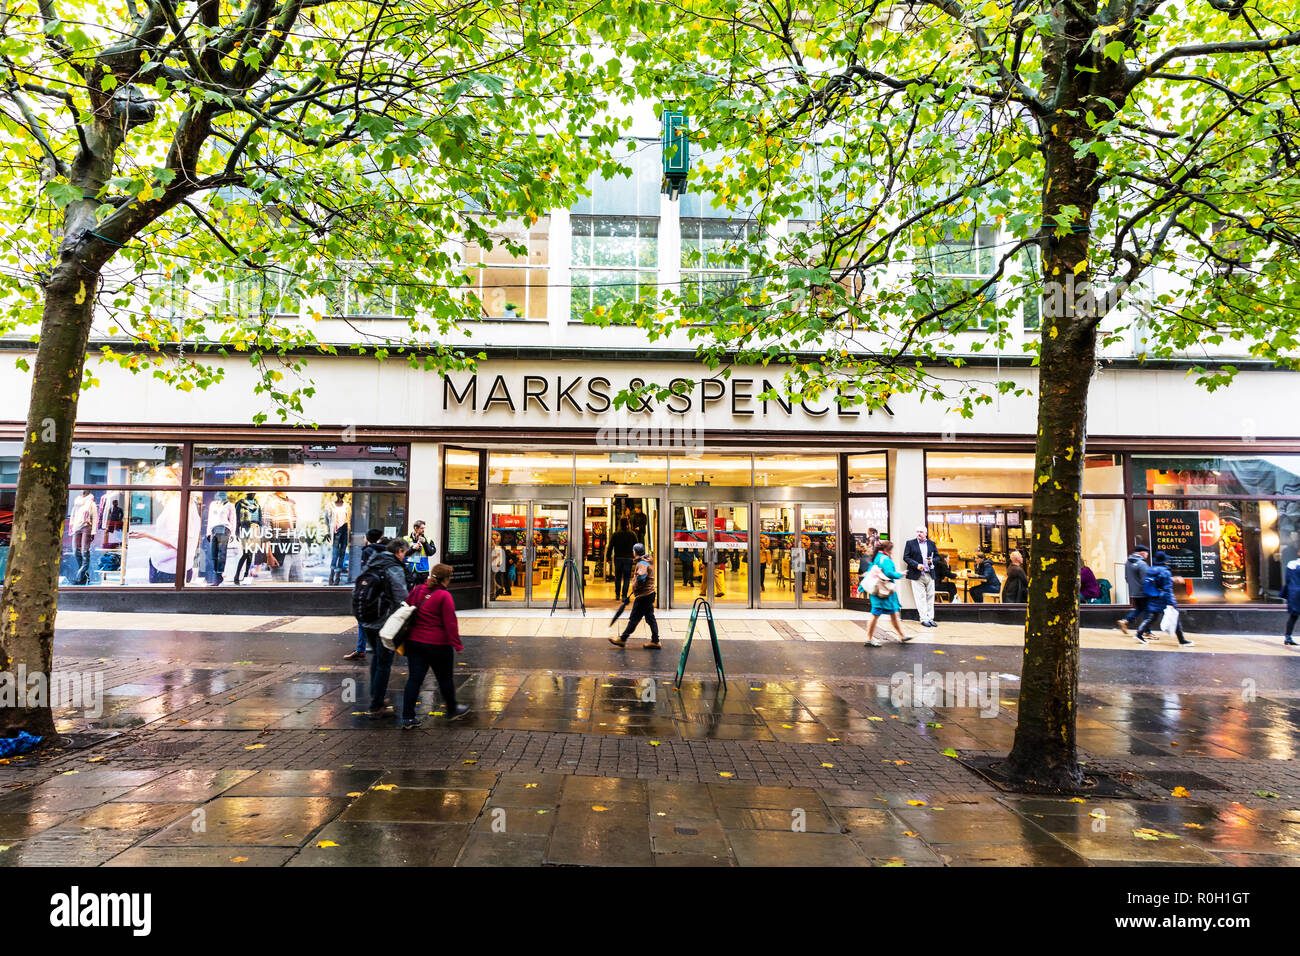 Marks & Spencer store York UK, M&S, Marks And Spencer, Marks & Spencer, Marks & Spencer shop, Marks & Spencer high street store, logo, sign, UK, shops Stock Photo